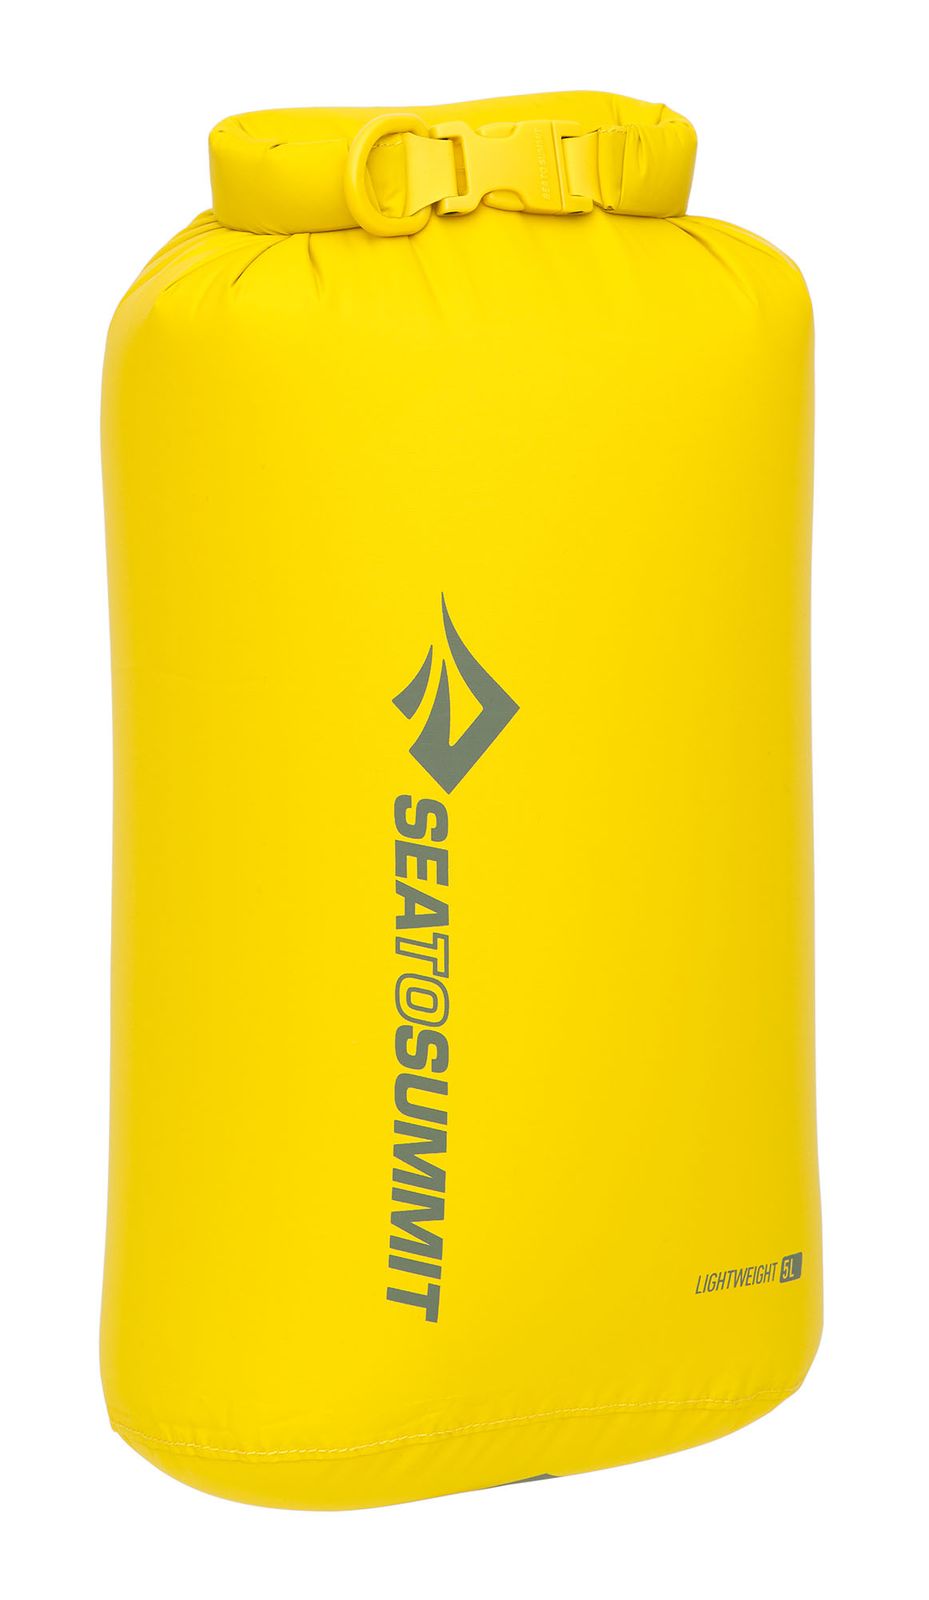 sea-to-summit-lightweight-dry-bag-5l-sulphur-防水袋產品介紹相片